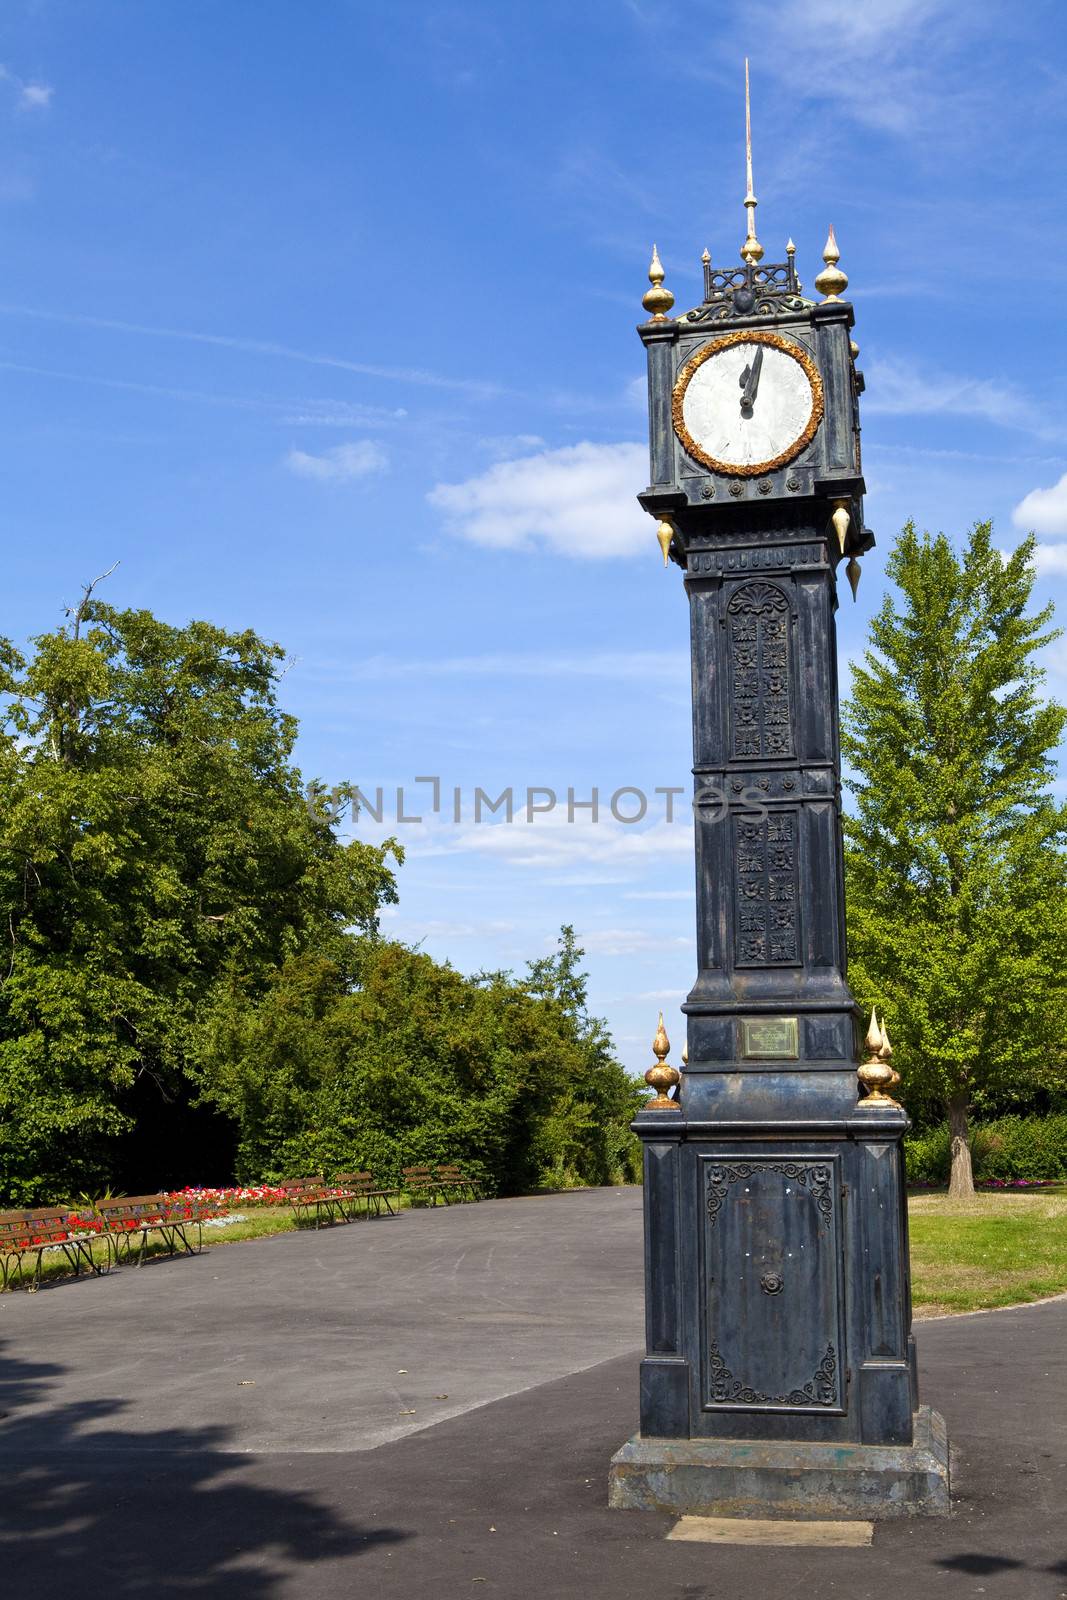 The 'Little Ben' clock in Brockwell Park, London.